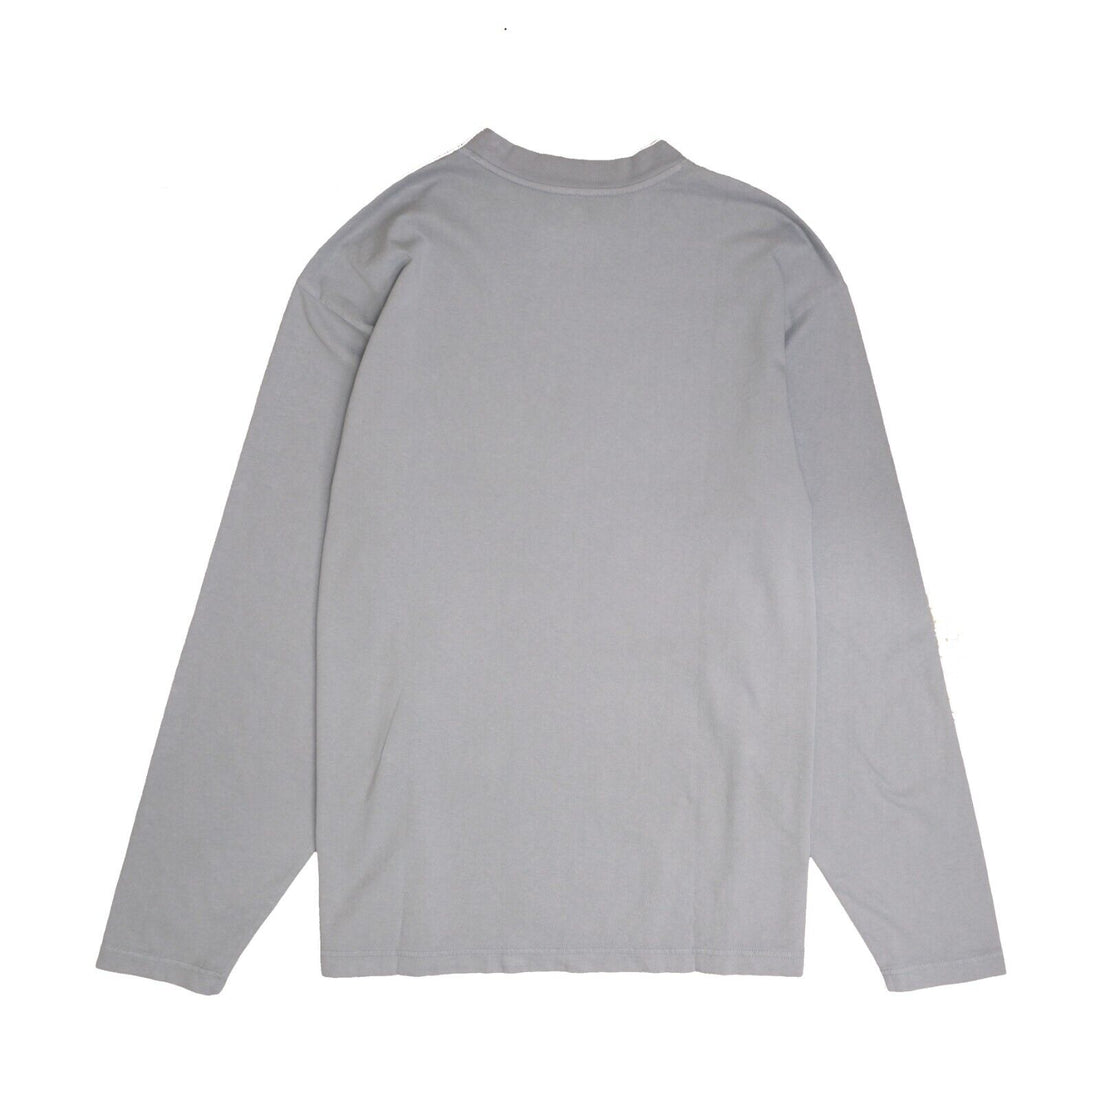 Yeezy Gap Unreleased Long Sleeve T-Shirt Size XL Gray